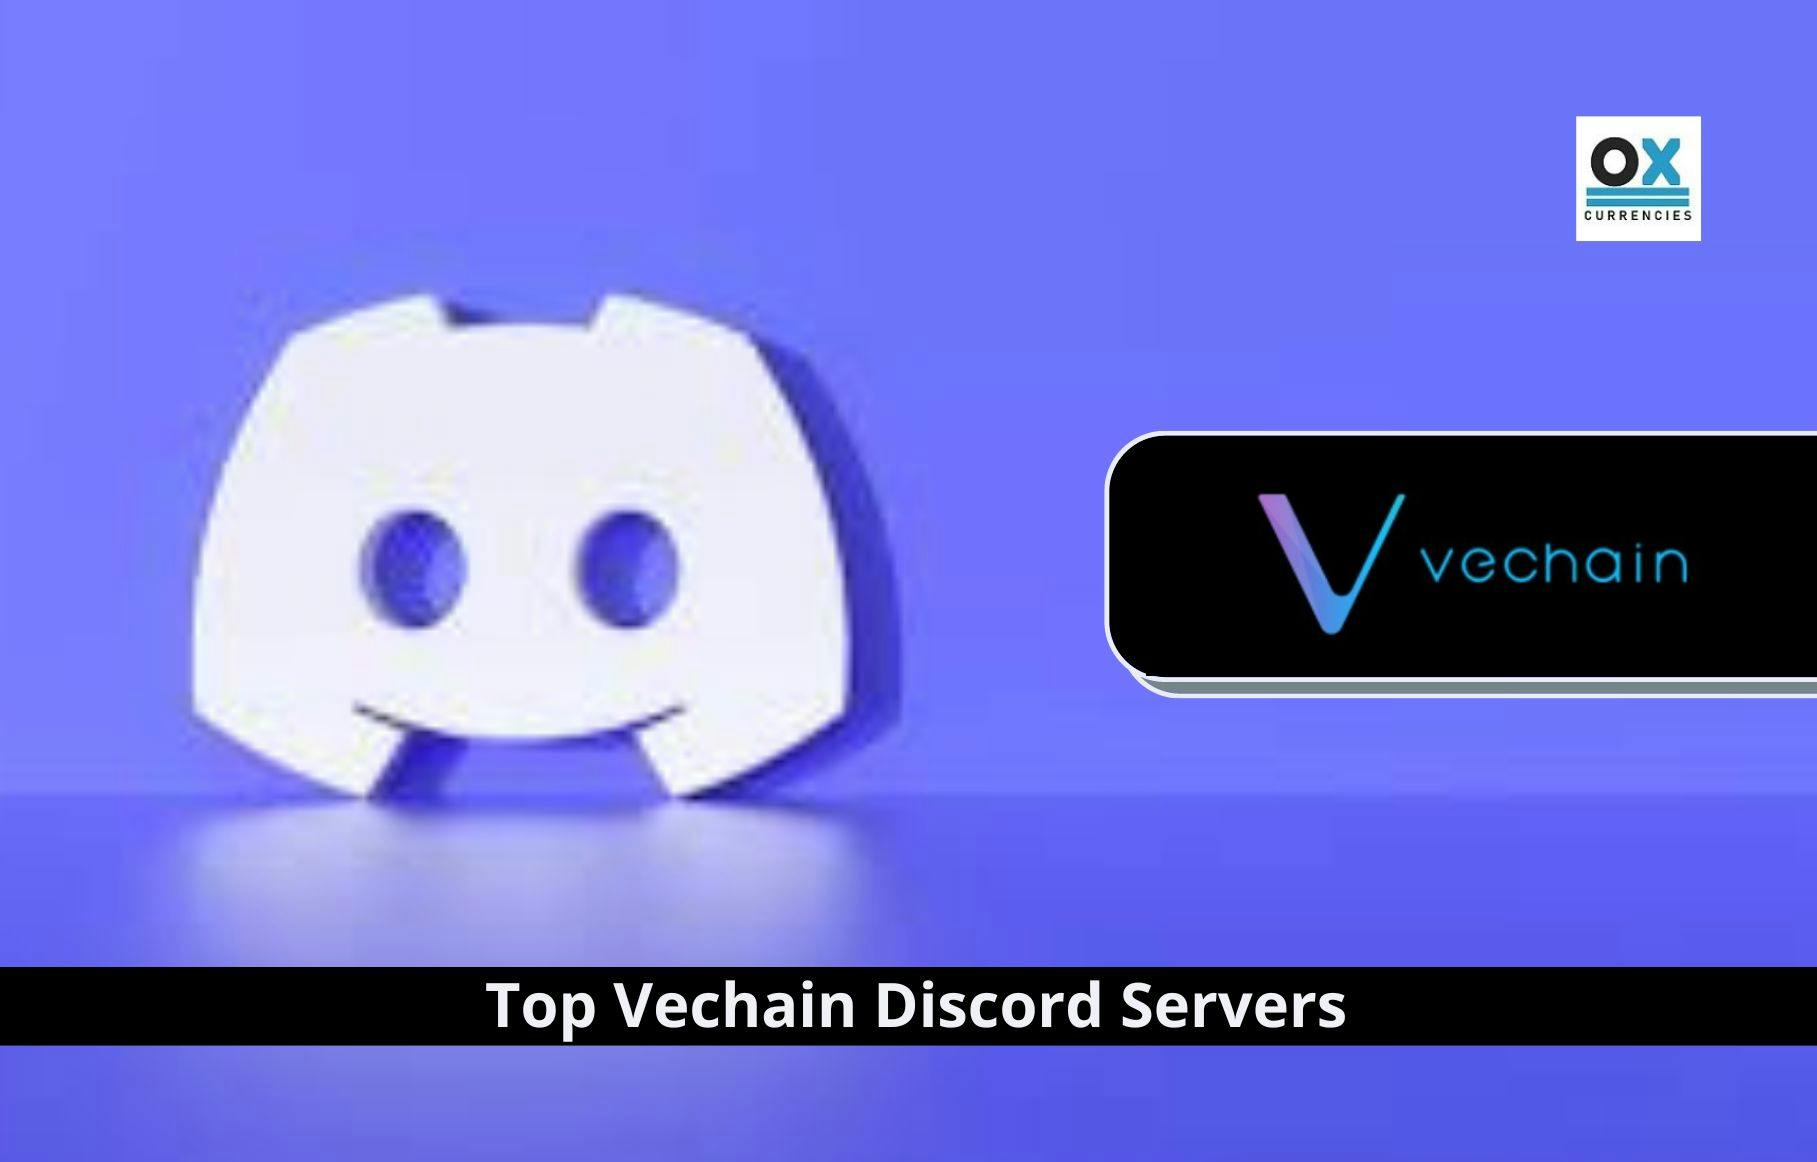 Top Vechain Discord Servers